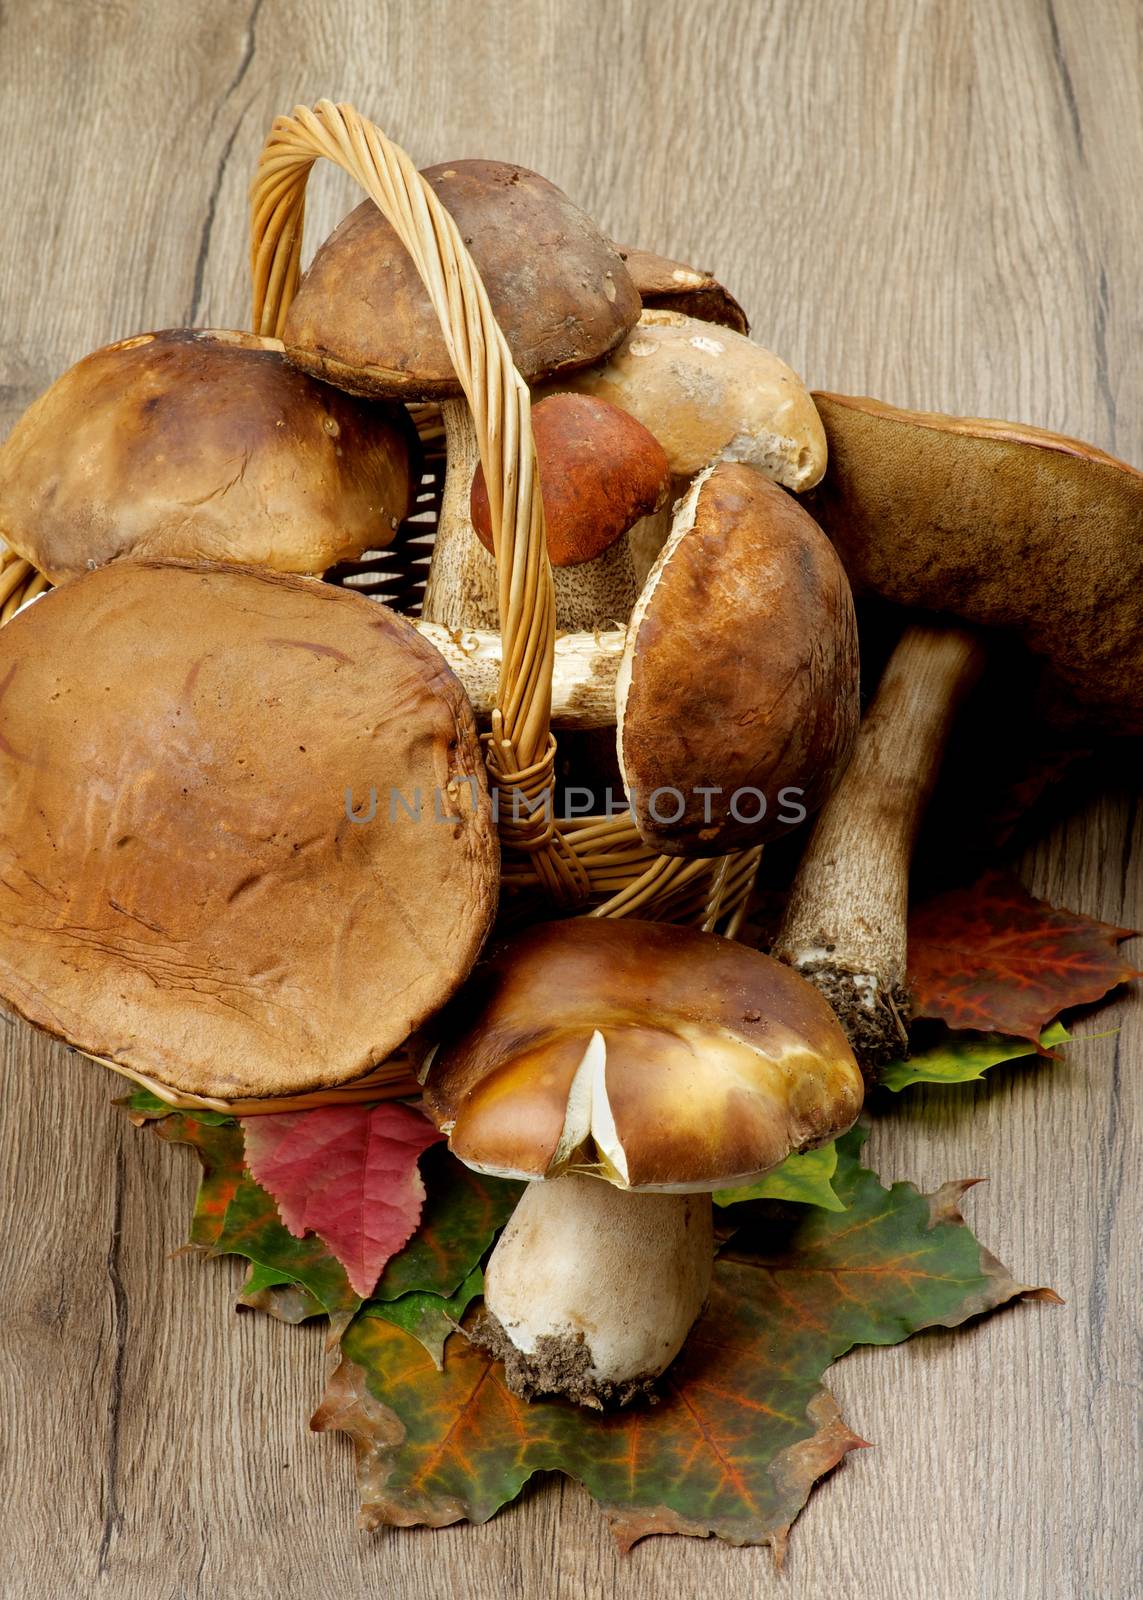 Forest Mushrooms by zhekos